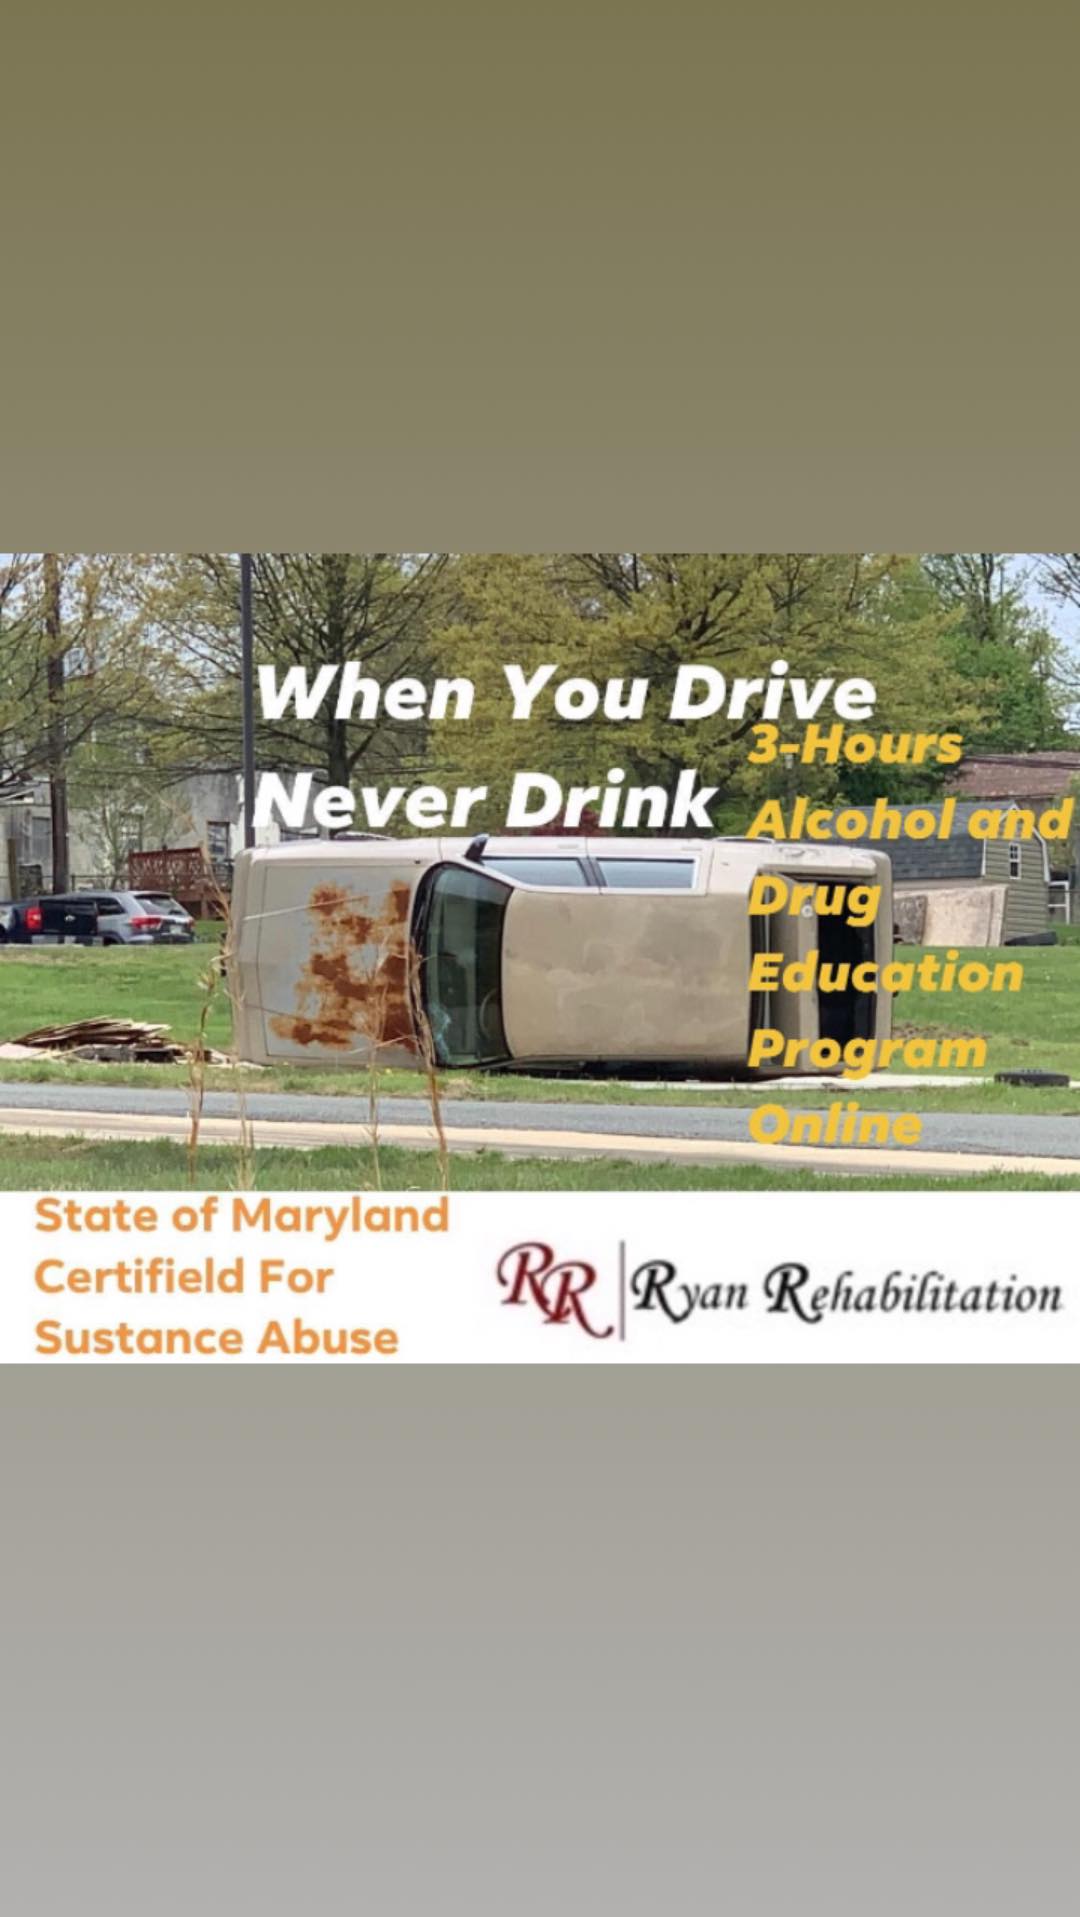 Ryan Rehabilitation LLC 5210 Auth Rd Ste 100, Camp Springs Maryland 20746